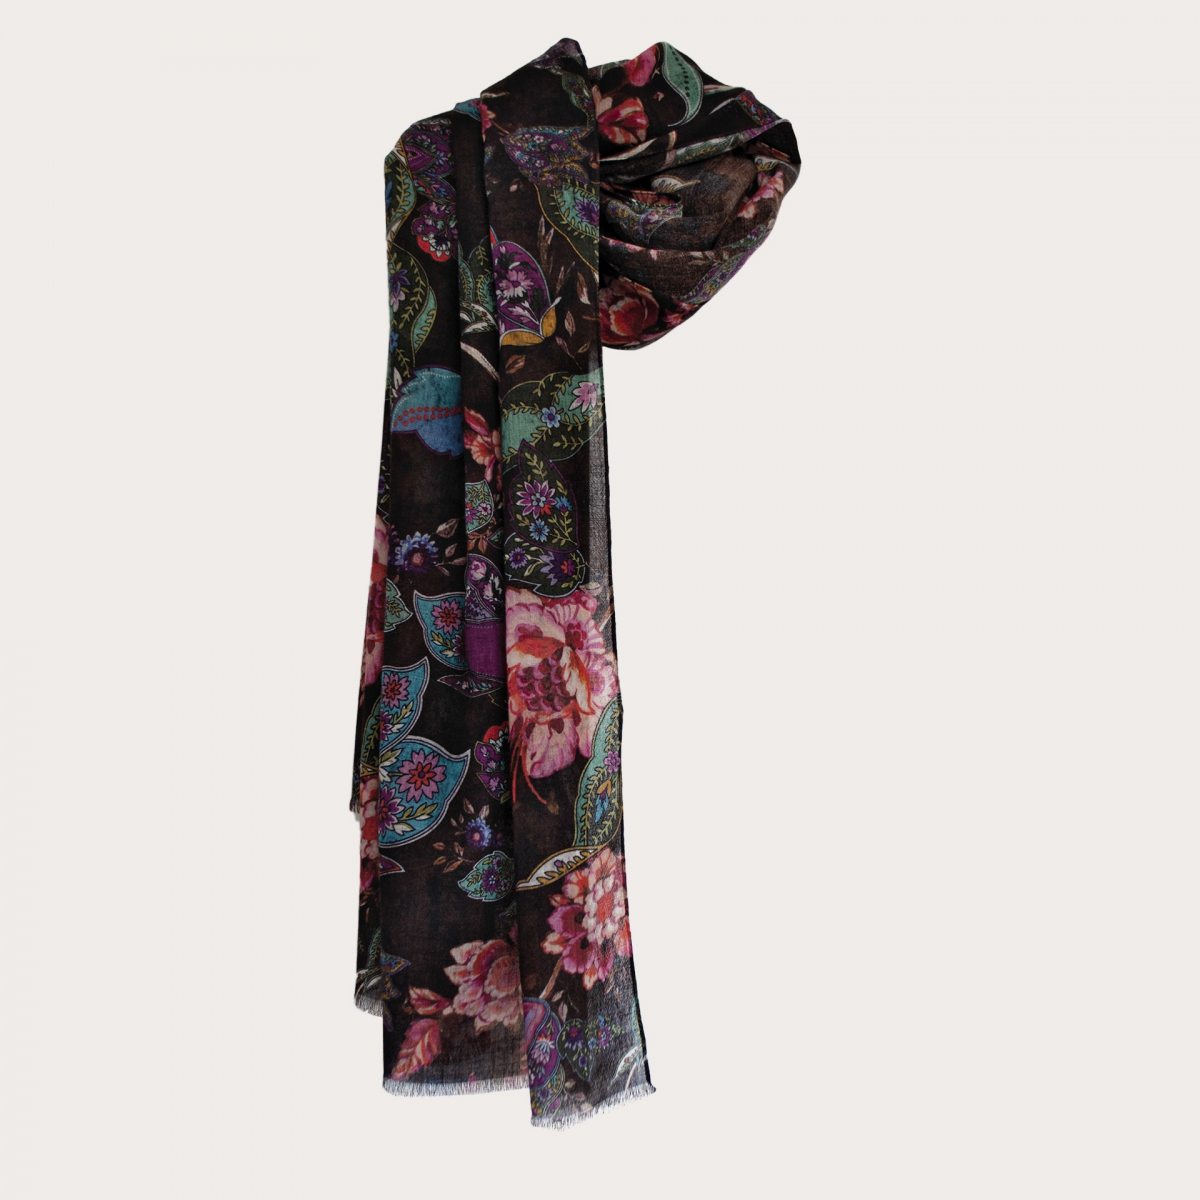 BRUCLE Foulard in lana leggera, motivo paisley con fiori